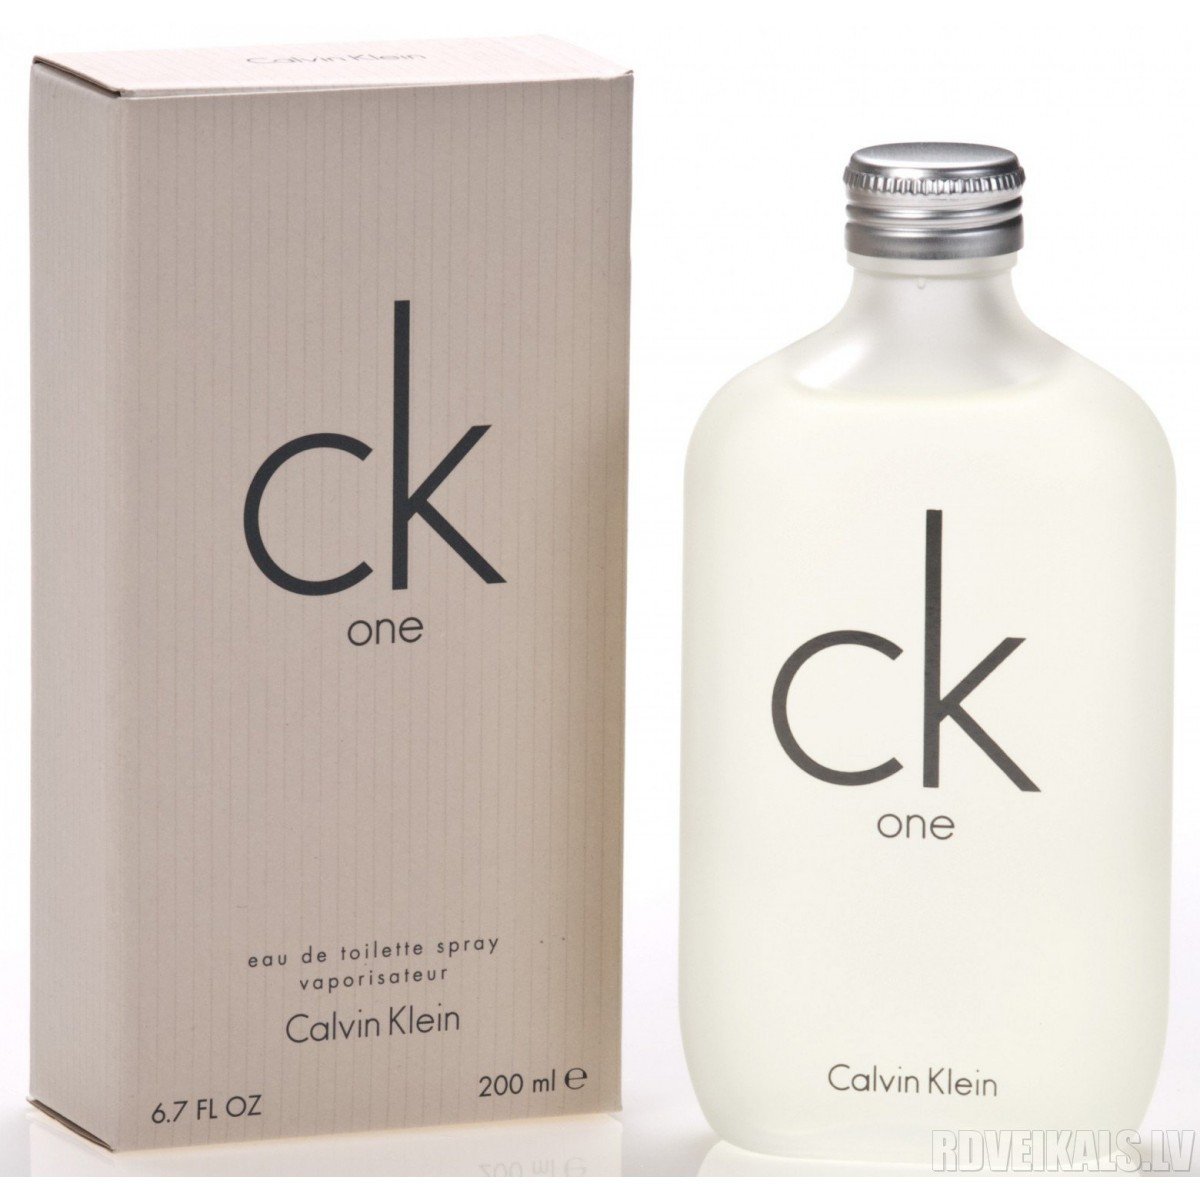 Perfume Calvin Klein Ck One Edt 200ml Unisex